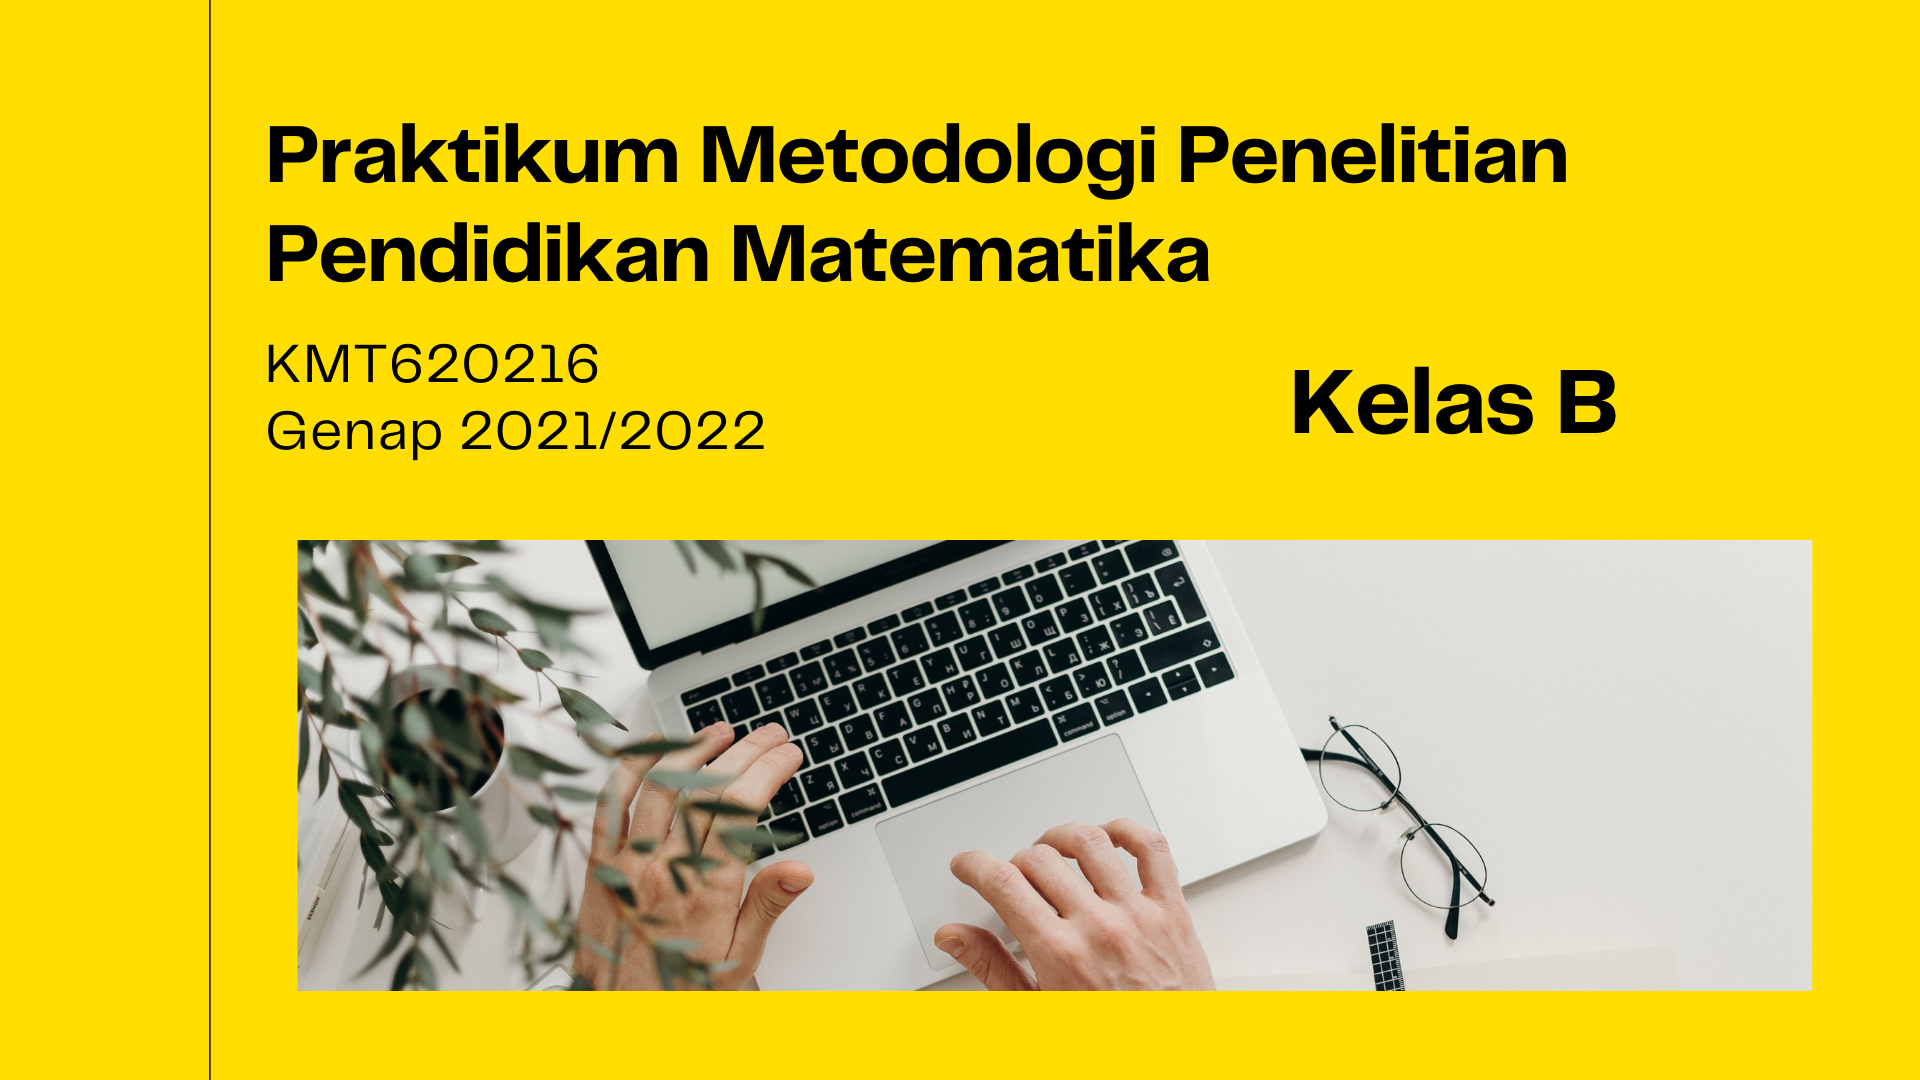 PSPM_Praktikum Metodologi Penelitian Pendidikan Matematika_Kelas B_Genap 2021/2022